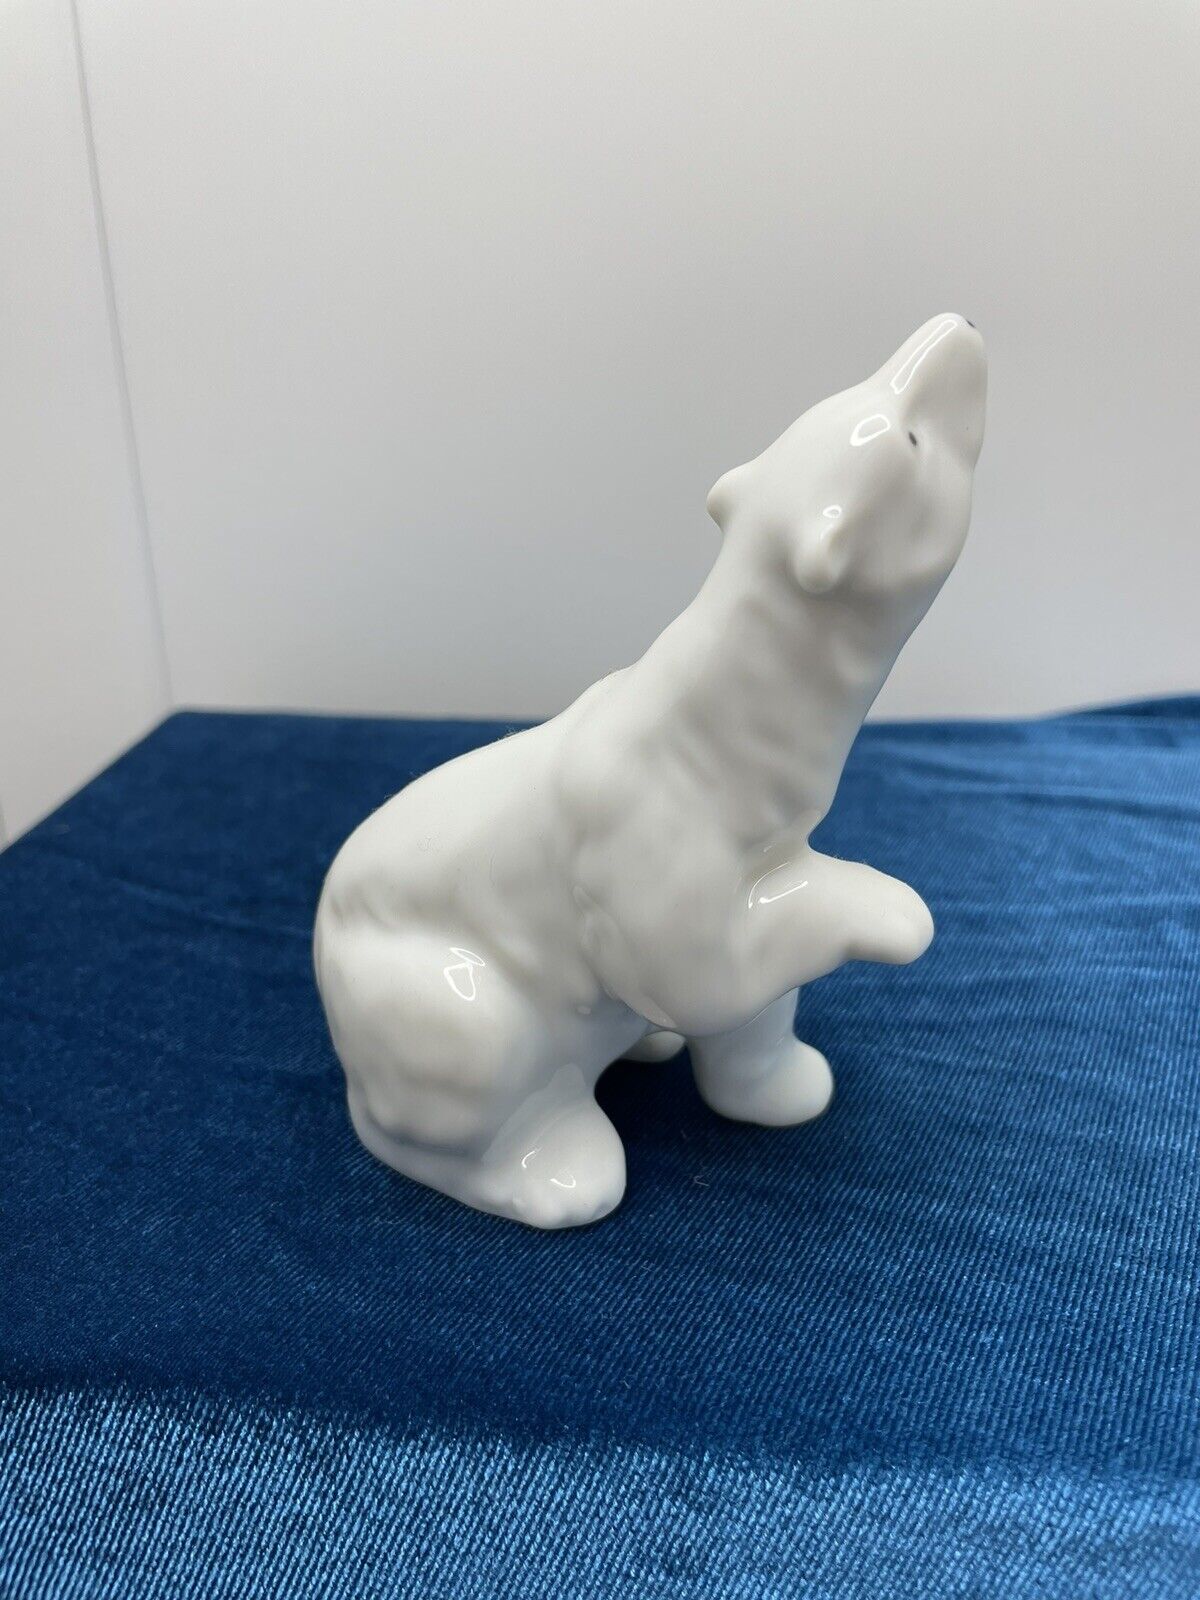 Otigari Japan porcelain sitting up polar bear figurine.  Great condition 4\